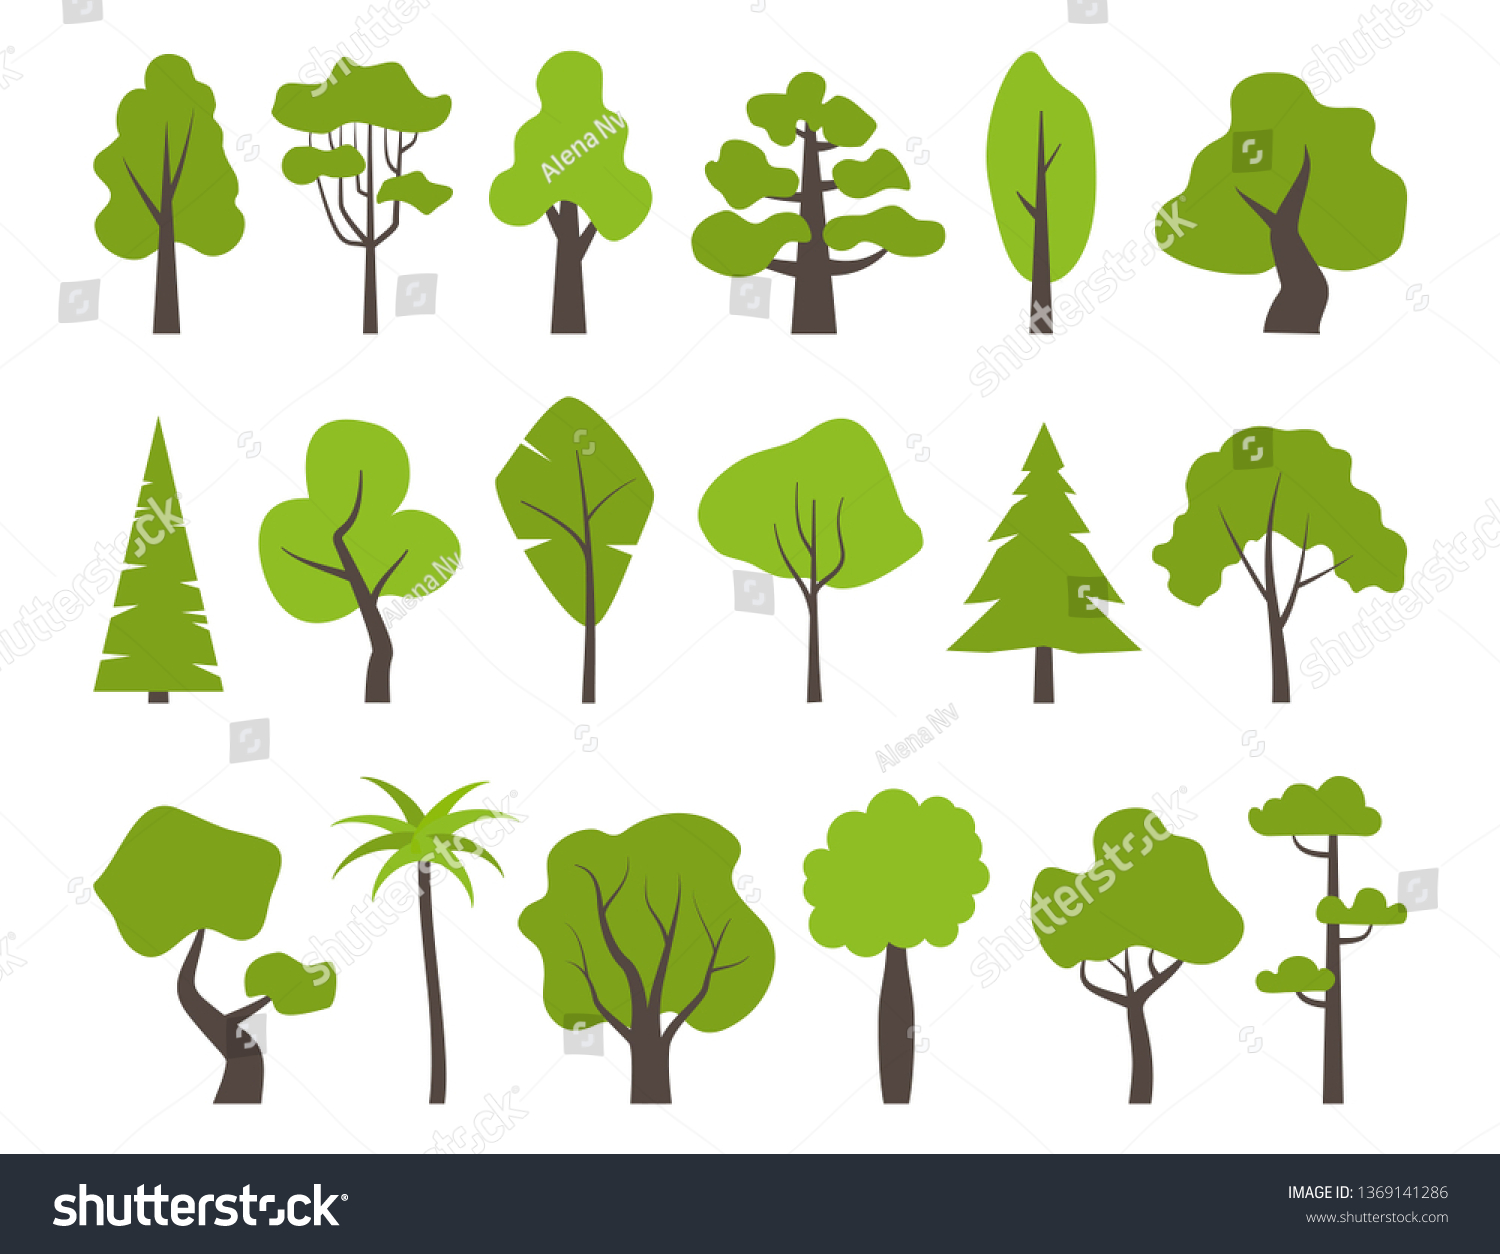 SVG of Big set of various trees. Tree icons set in a modern flat style. Pine, spruce, oak, birch, trunk, aspen, alder, poplar, chestnut, palm apple tree Vector illustration svg